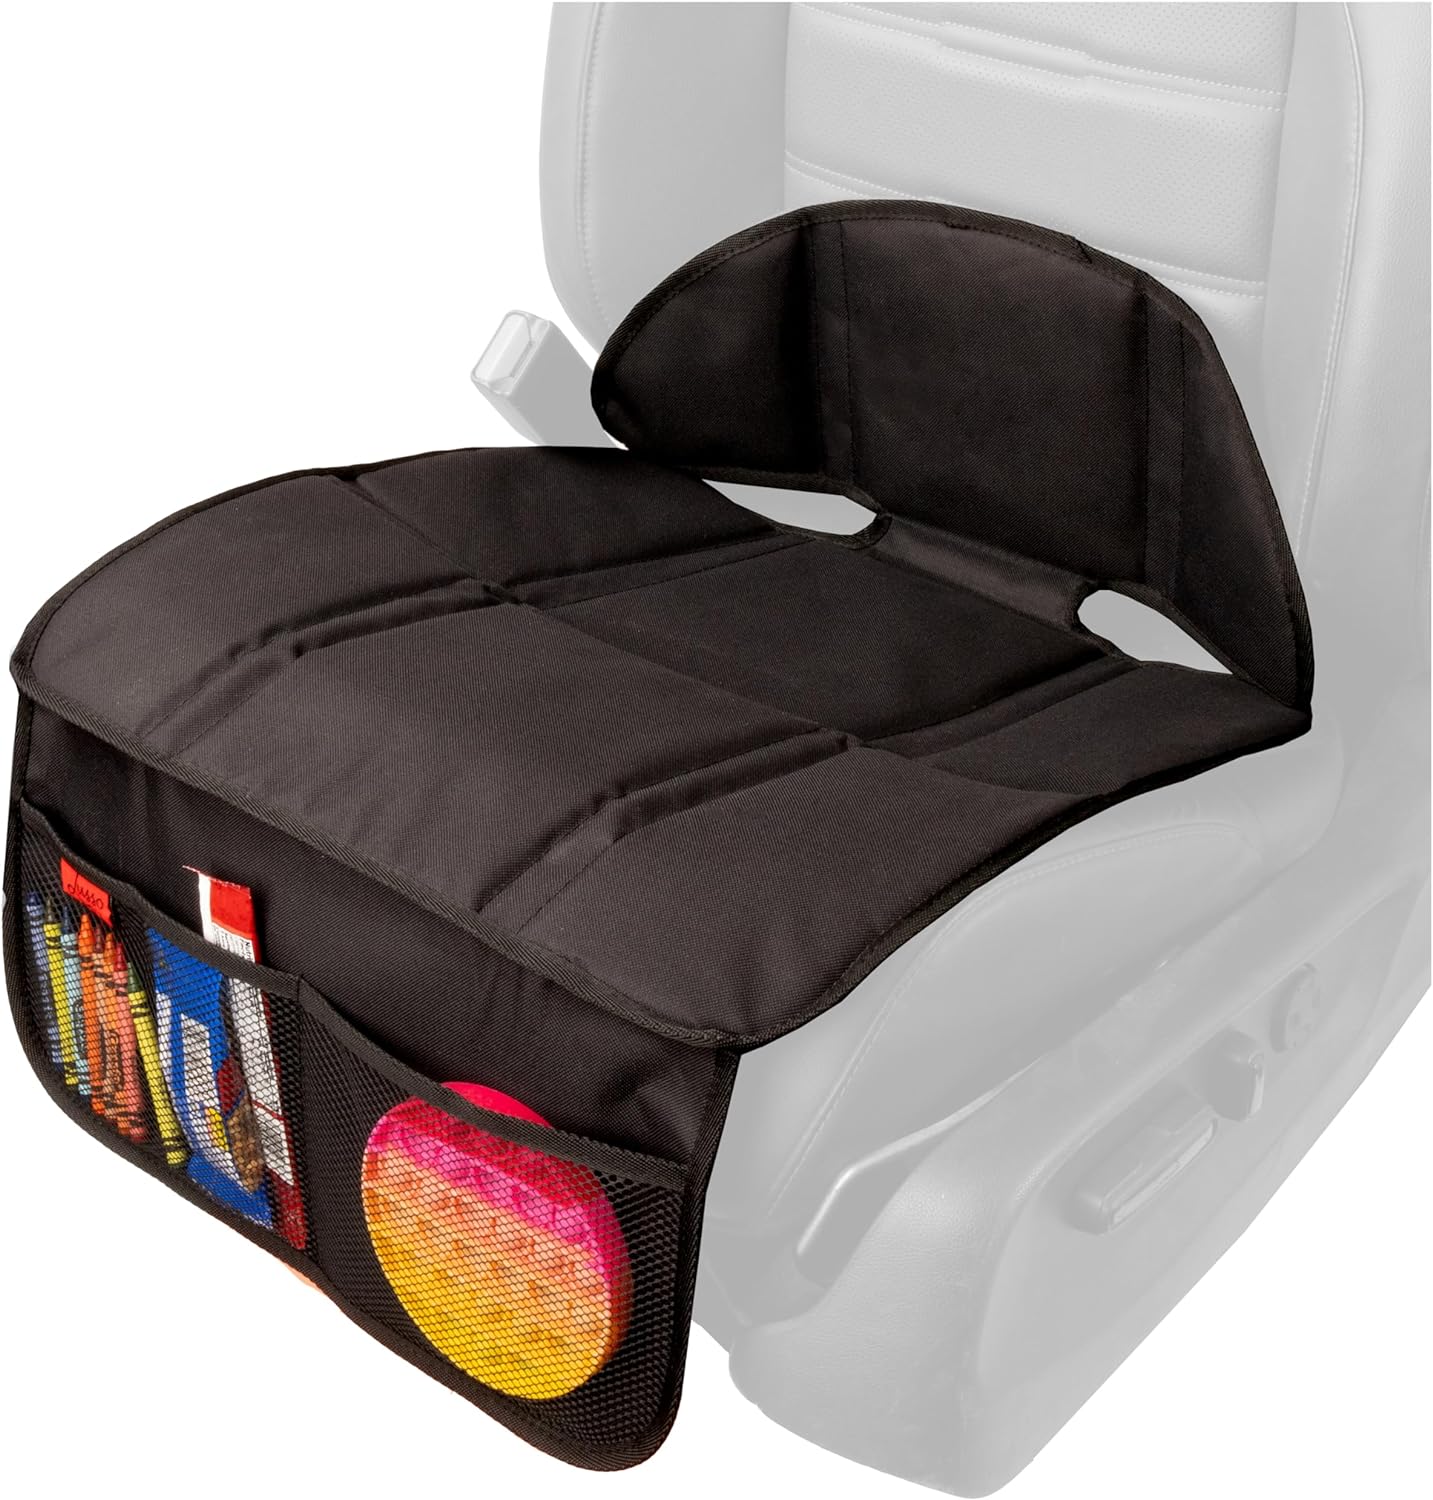 Black - Super Basic Edition / For Child Car Seat